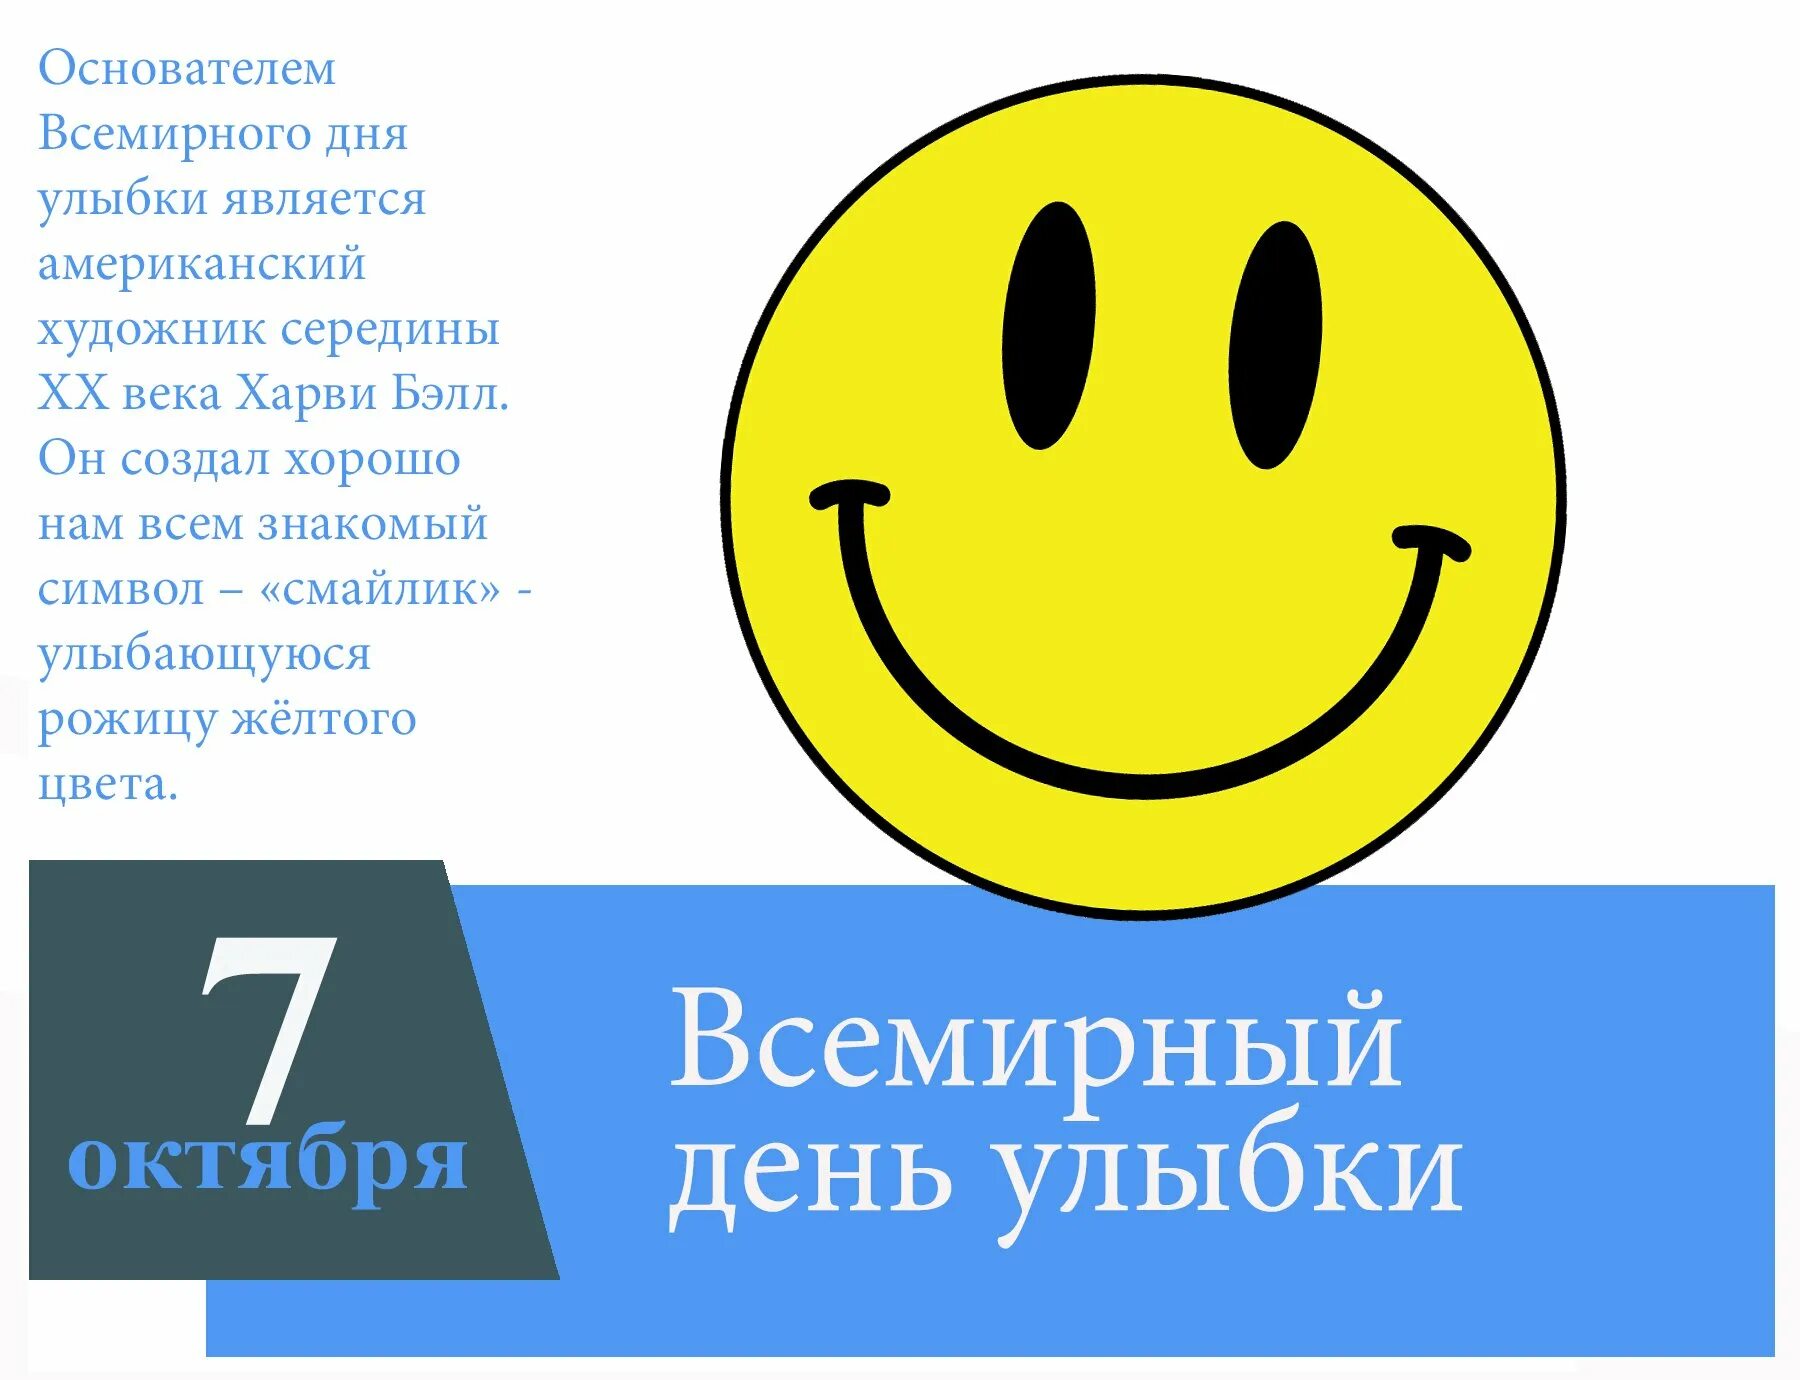 Улыбки какое число. Всемирный день улыбки. Всемирный день улыбки открытки. 7 Октября Всемирный день улыбки. Всемирный день улыбки 2021.